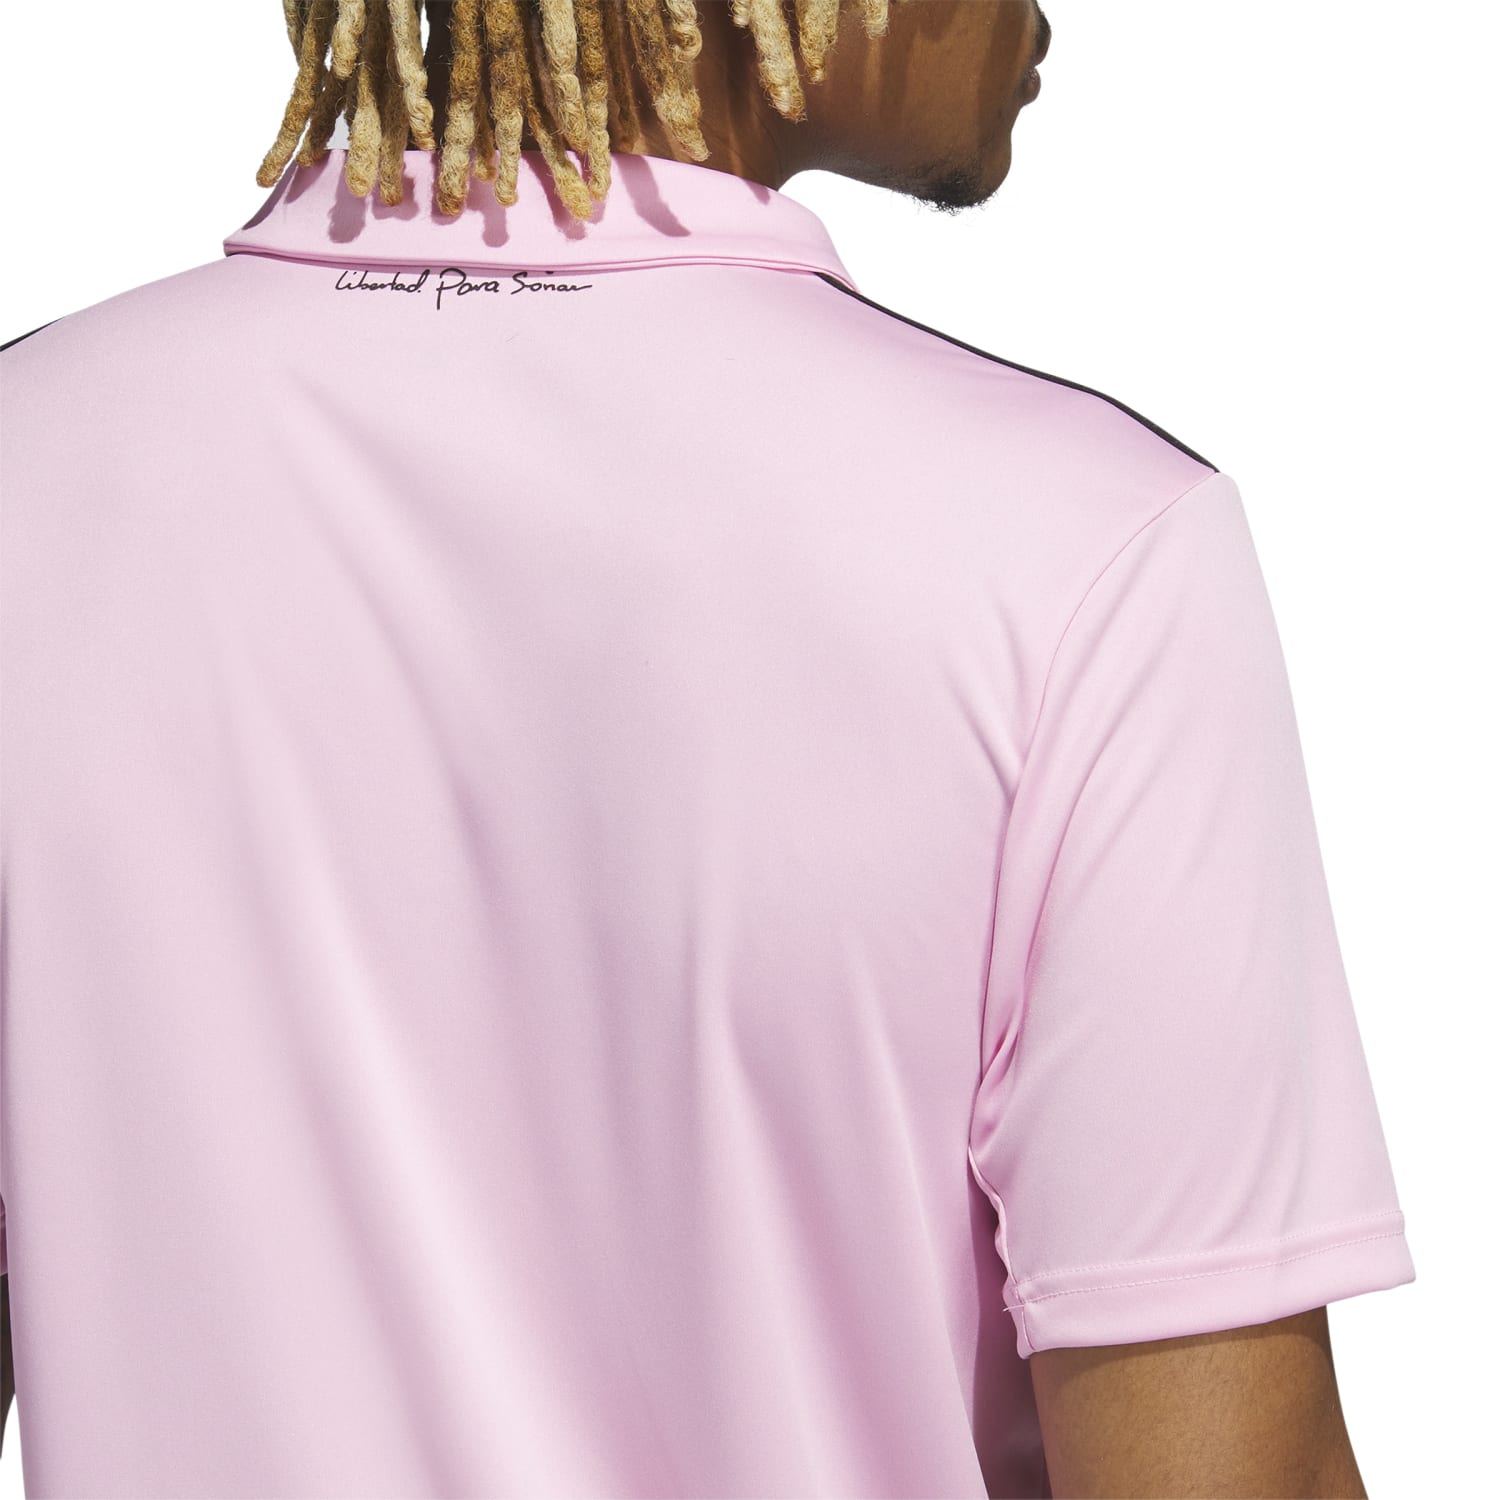 Adidas Men Inter Miami CF Home Jersey Pink IB5027 - TOPS - Canada